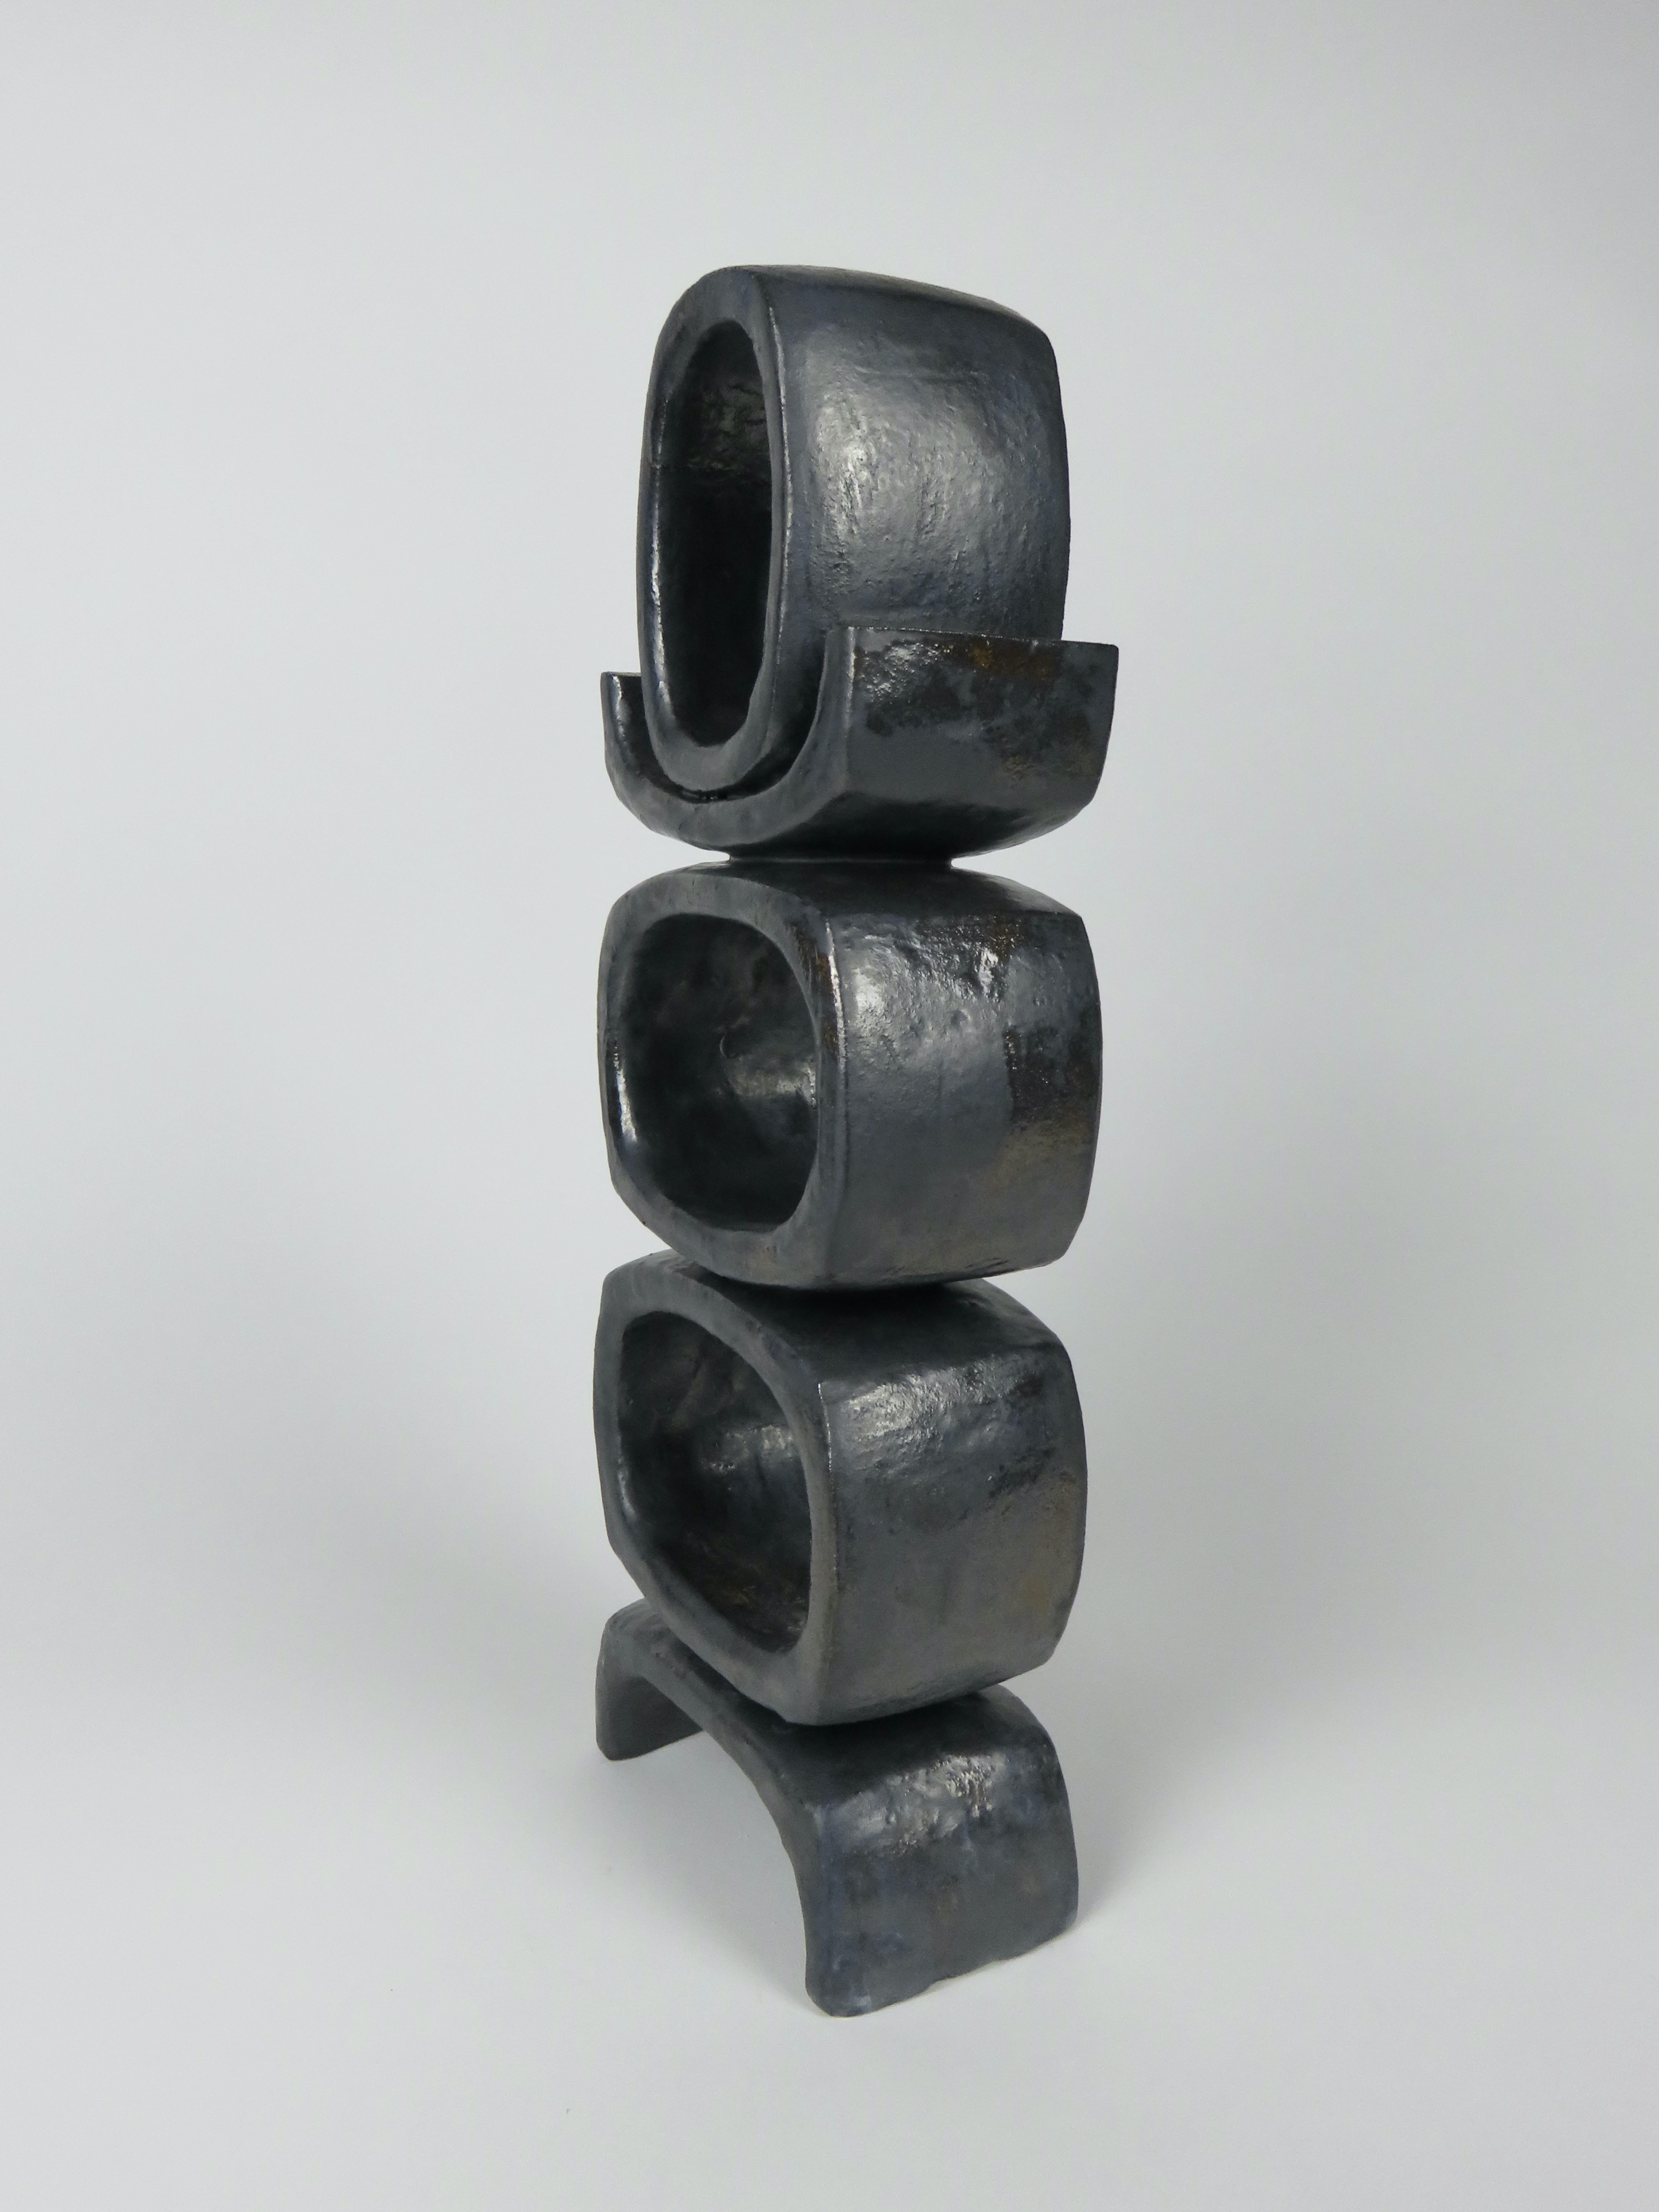 Ceramic 3 Rectangular Ovals on Short Angled Legs, Metallic Black-Glaze Clay Sculpture #2 For Sale